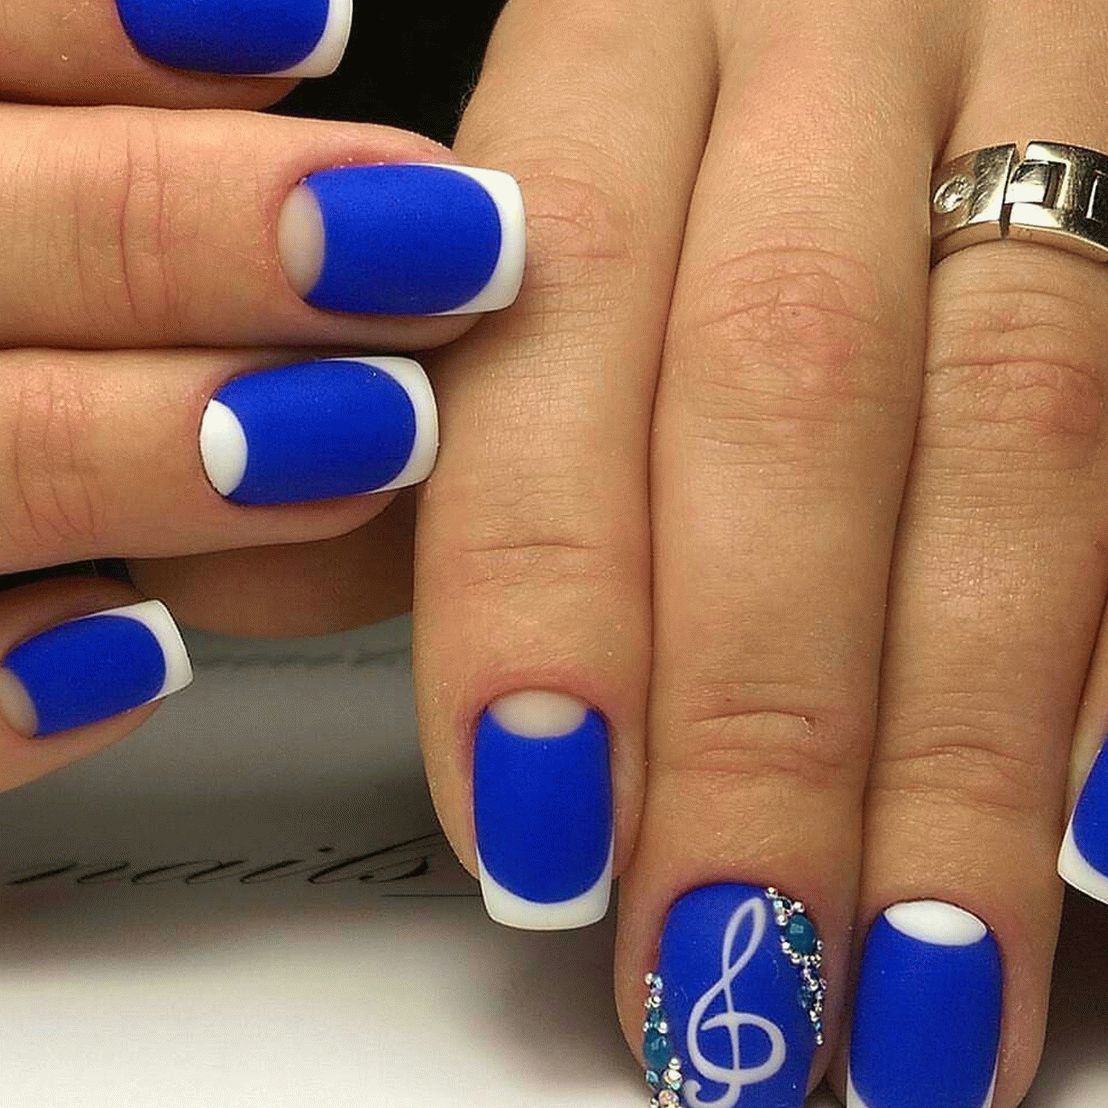 elegante design delle unghie blu-bianco luna